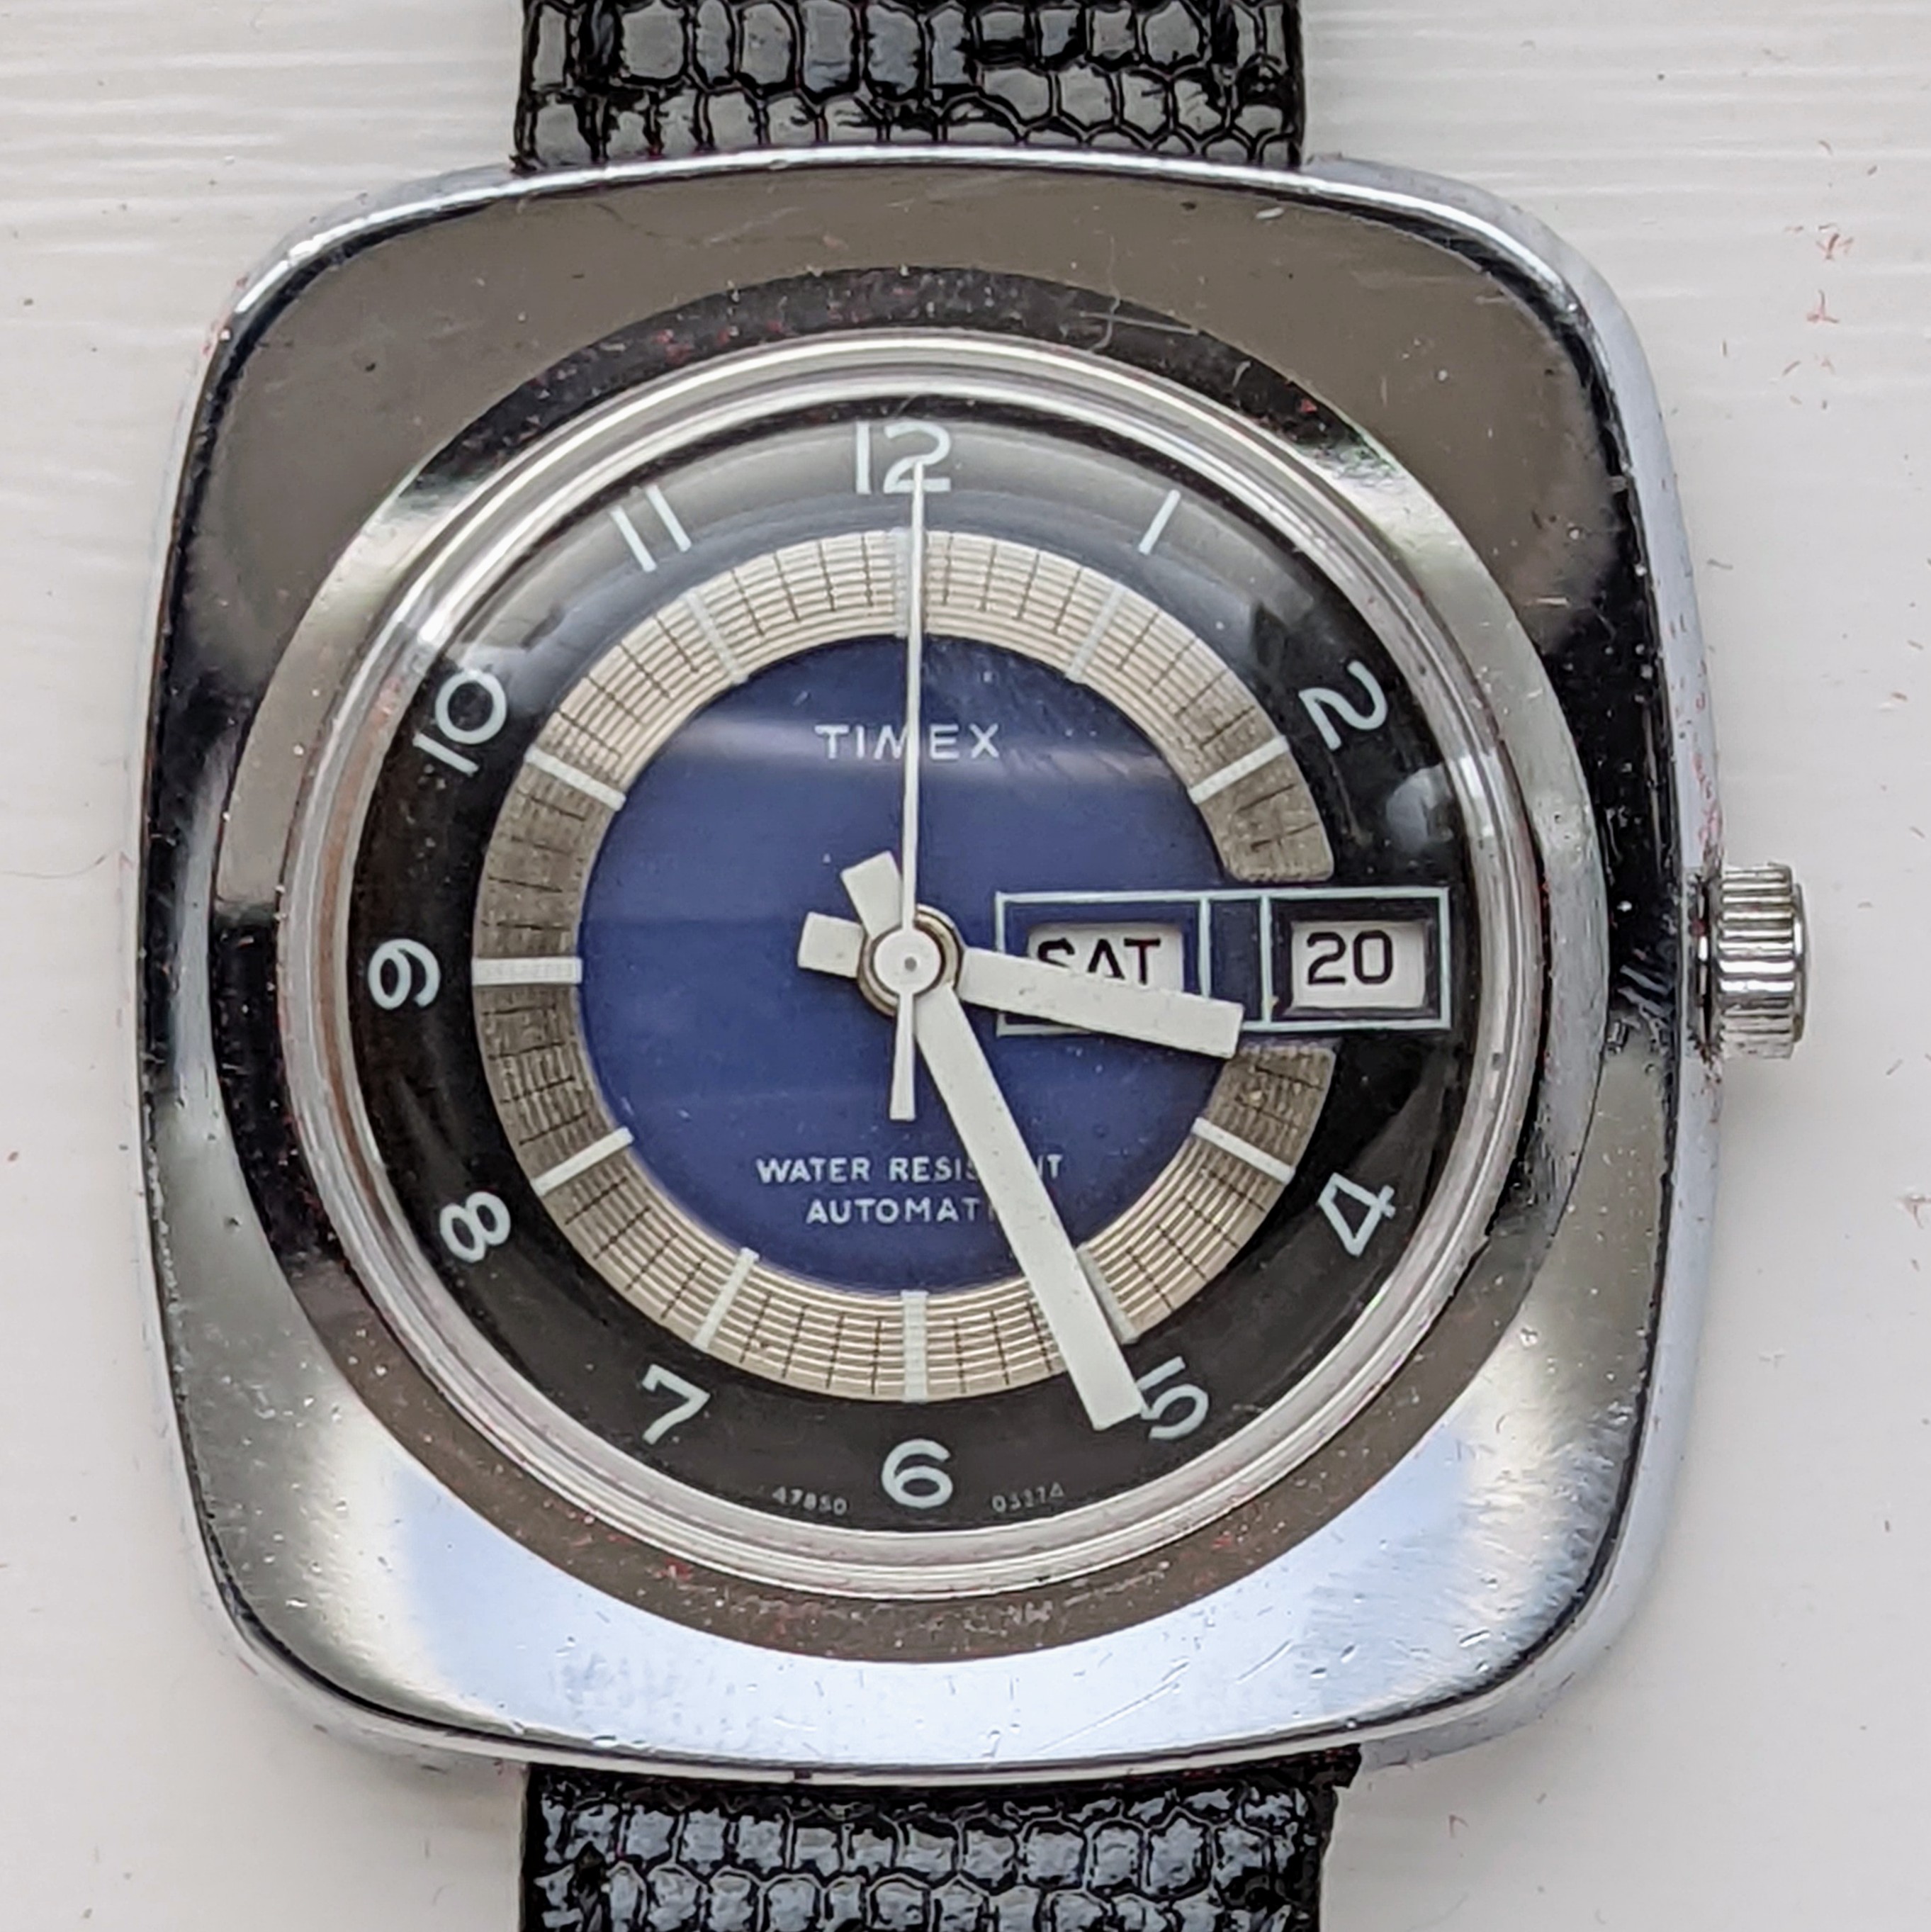 Timex Viscount 47850 03374 [1974]